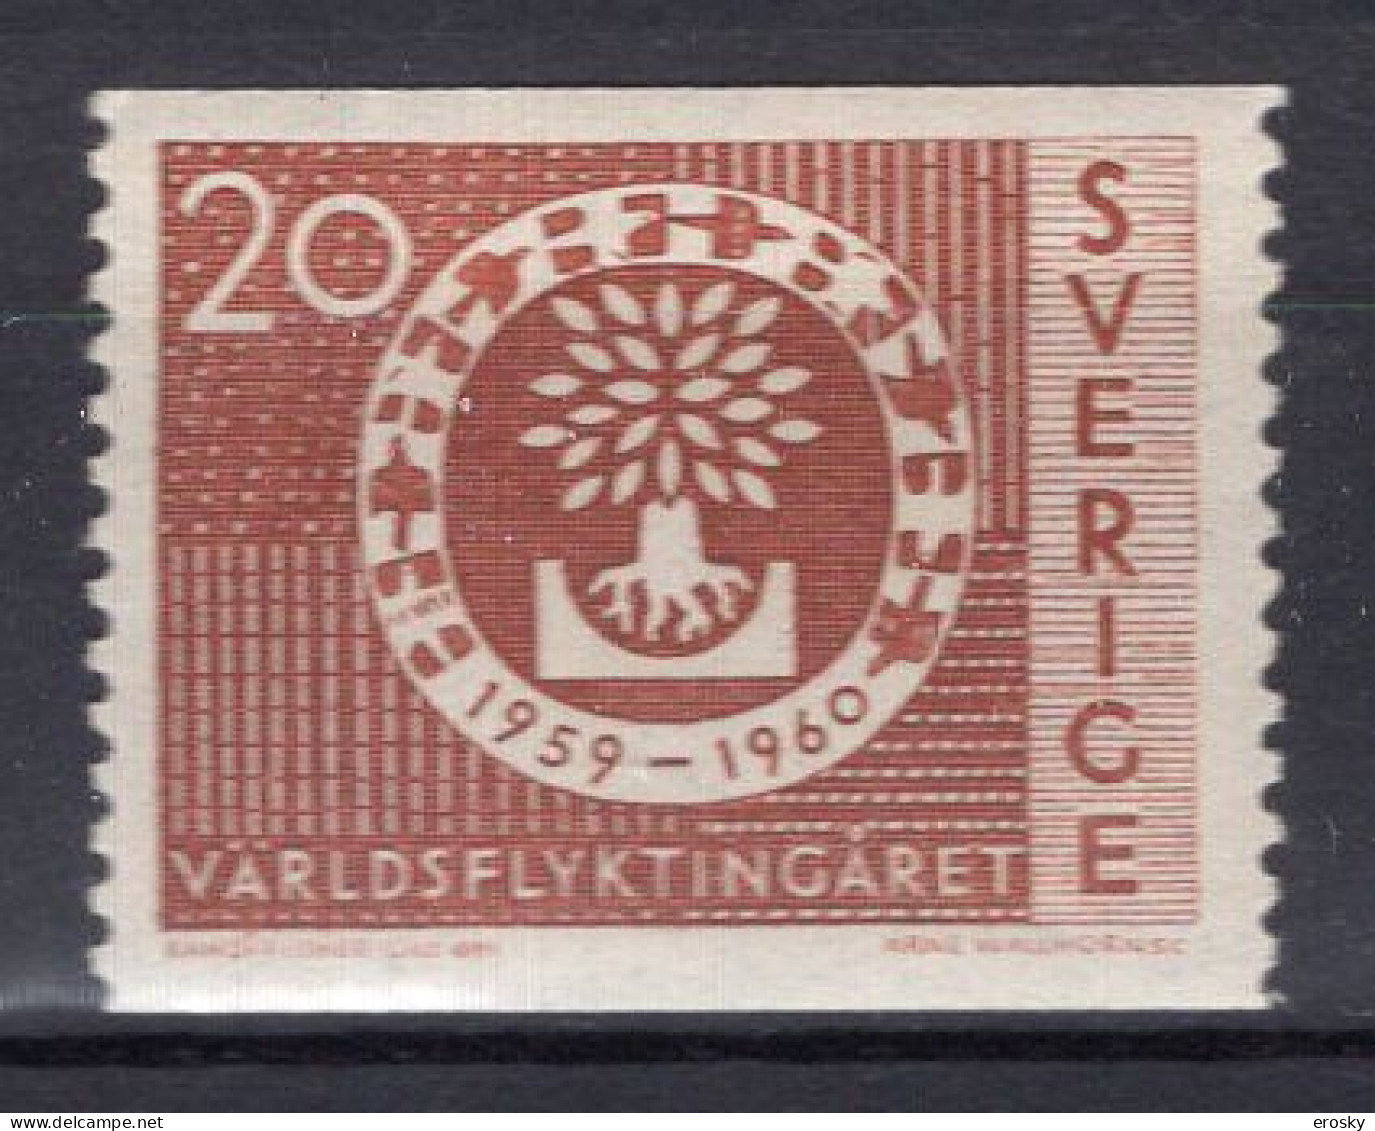 T1242 - SUEDE SWEDEN Yv N°448 ** - Unused Stamps